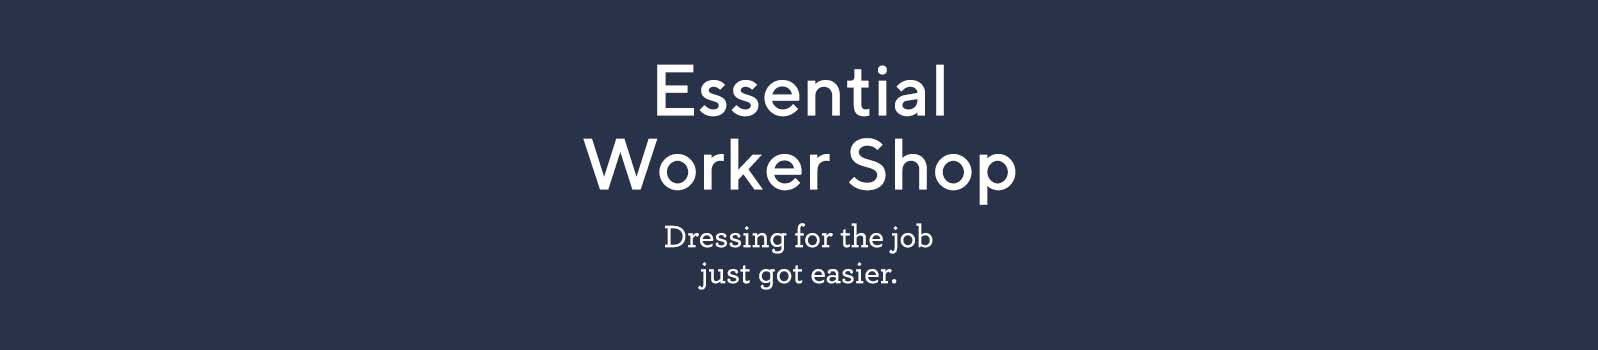 Essential Worker Shop.  Dressing for the job just got easier.